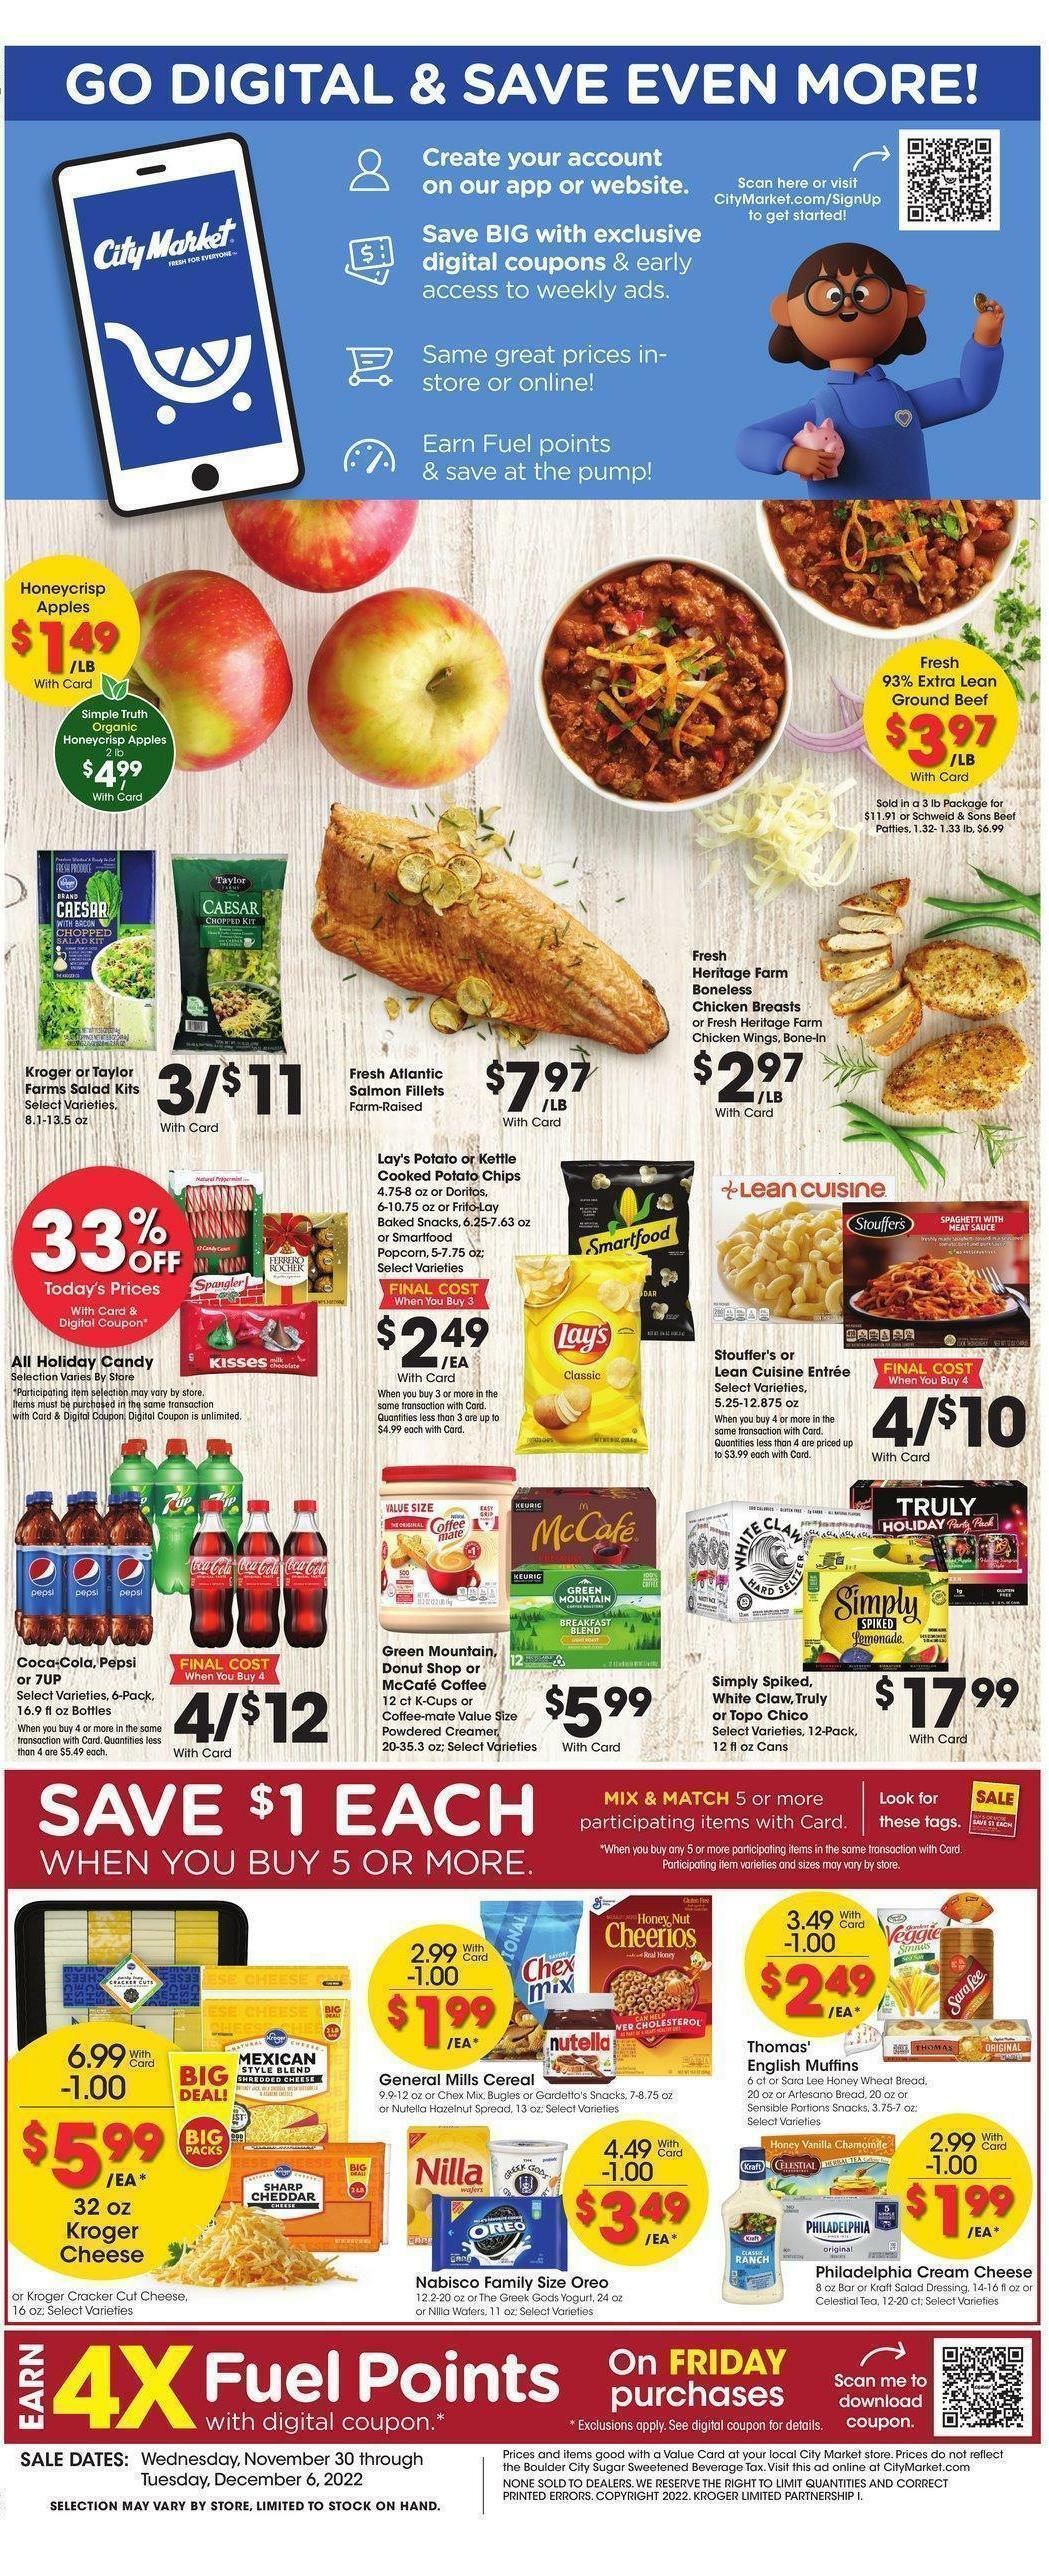 City Market Weekly Ad from November 30